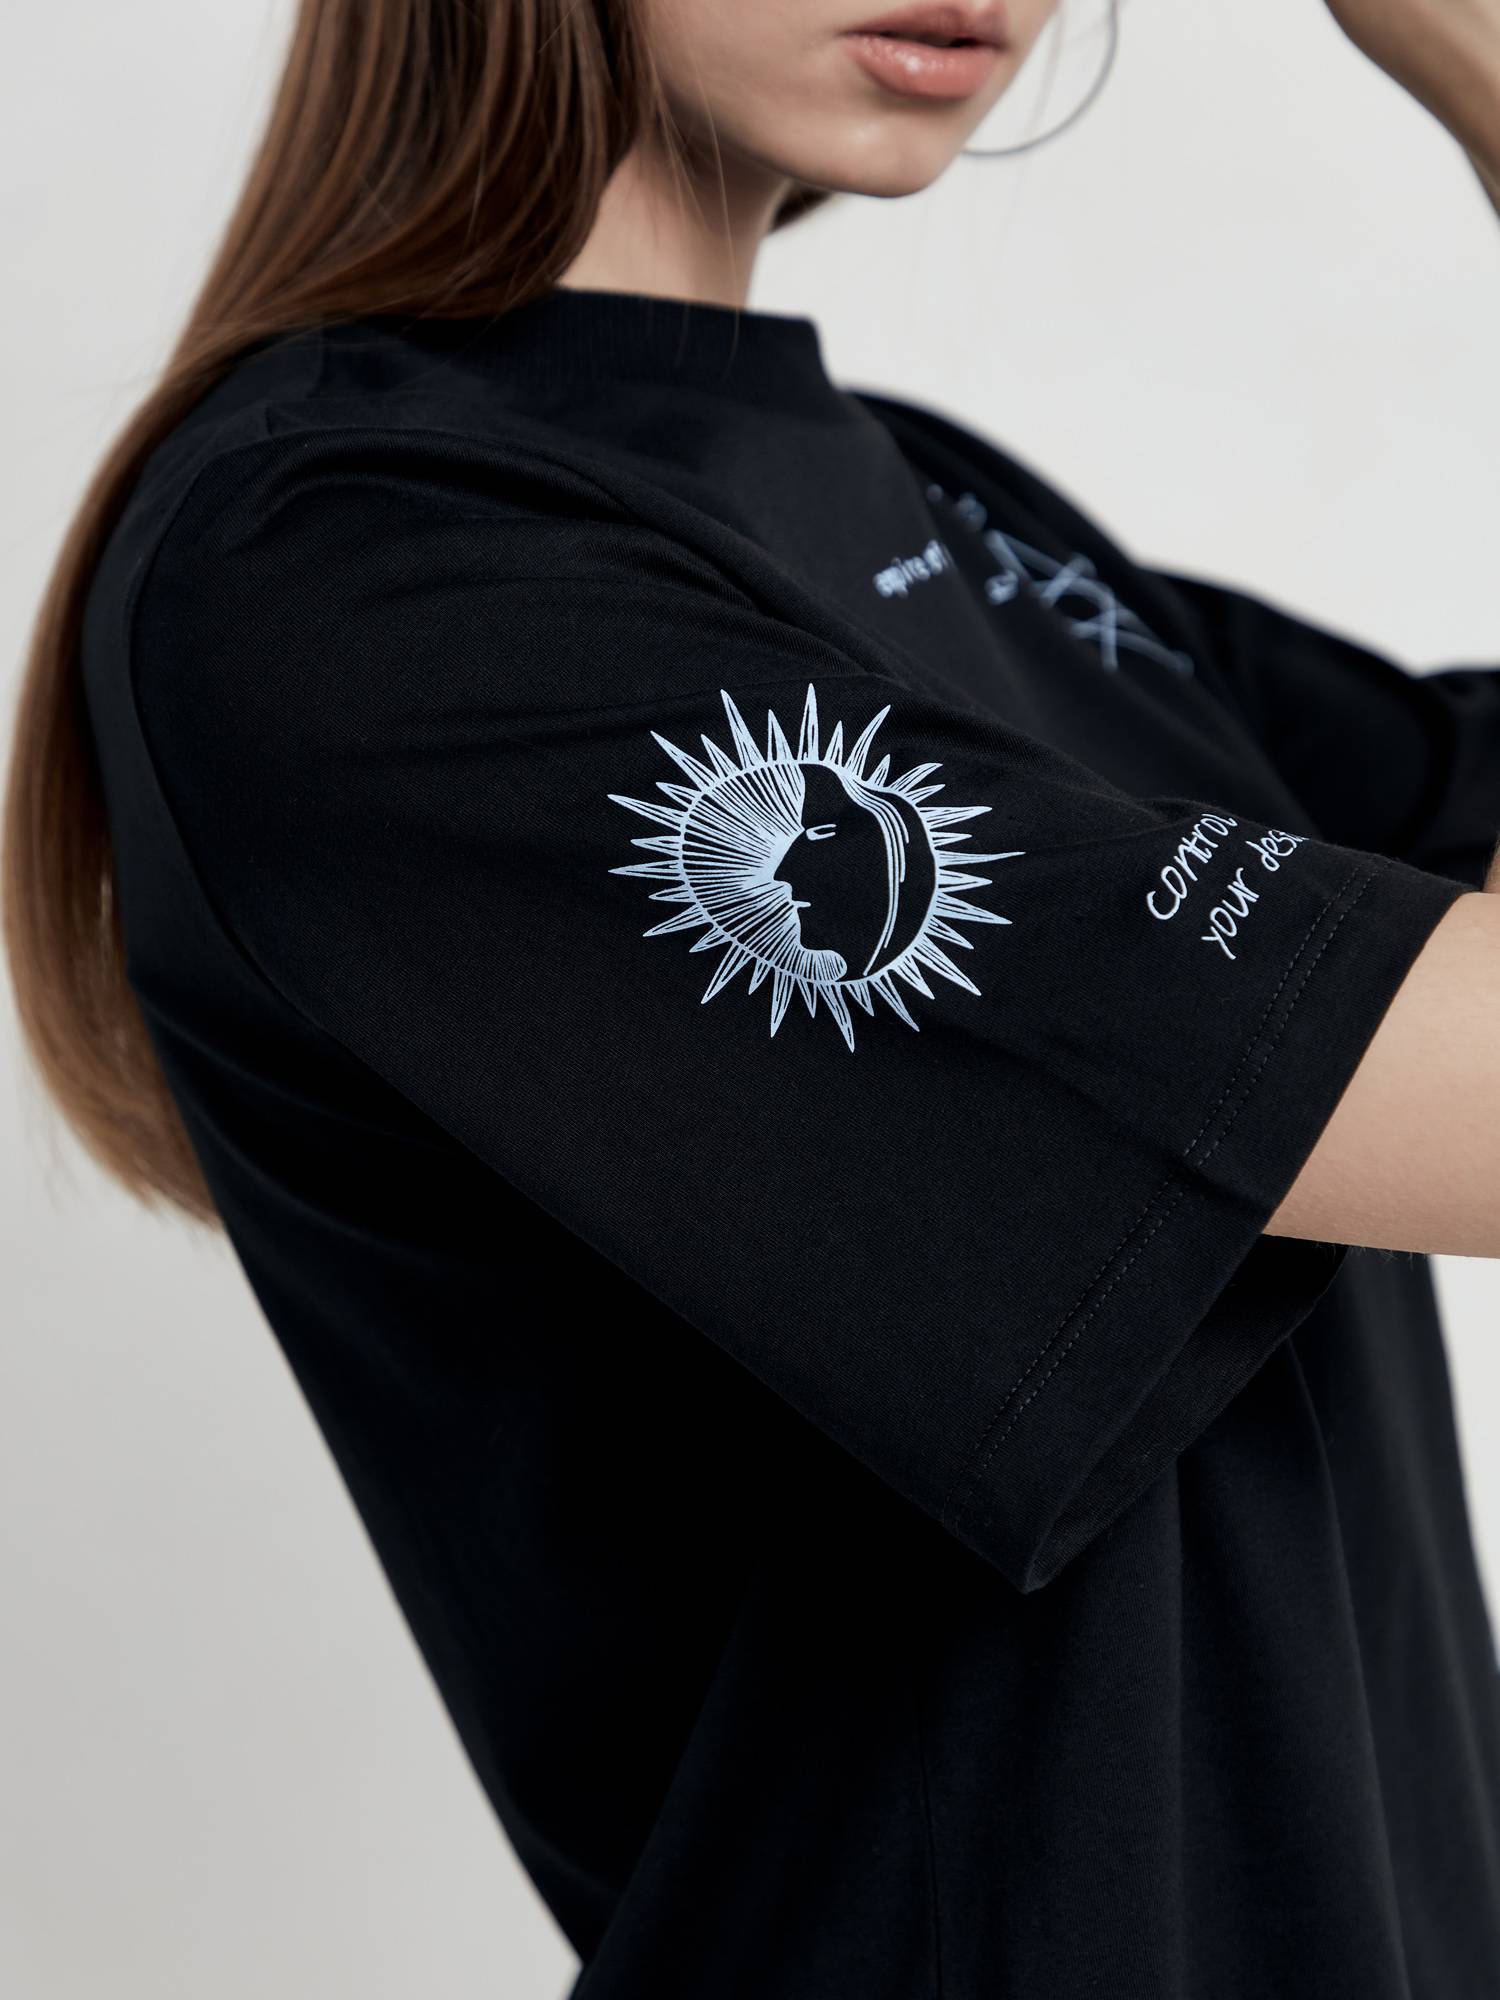 Oversize-футболка «Destinity» LD 1686 Conte ⭐️, цвет black, размер 170-84/xs - фото 1